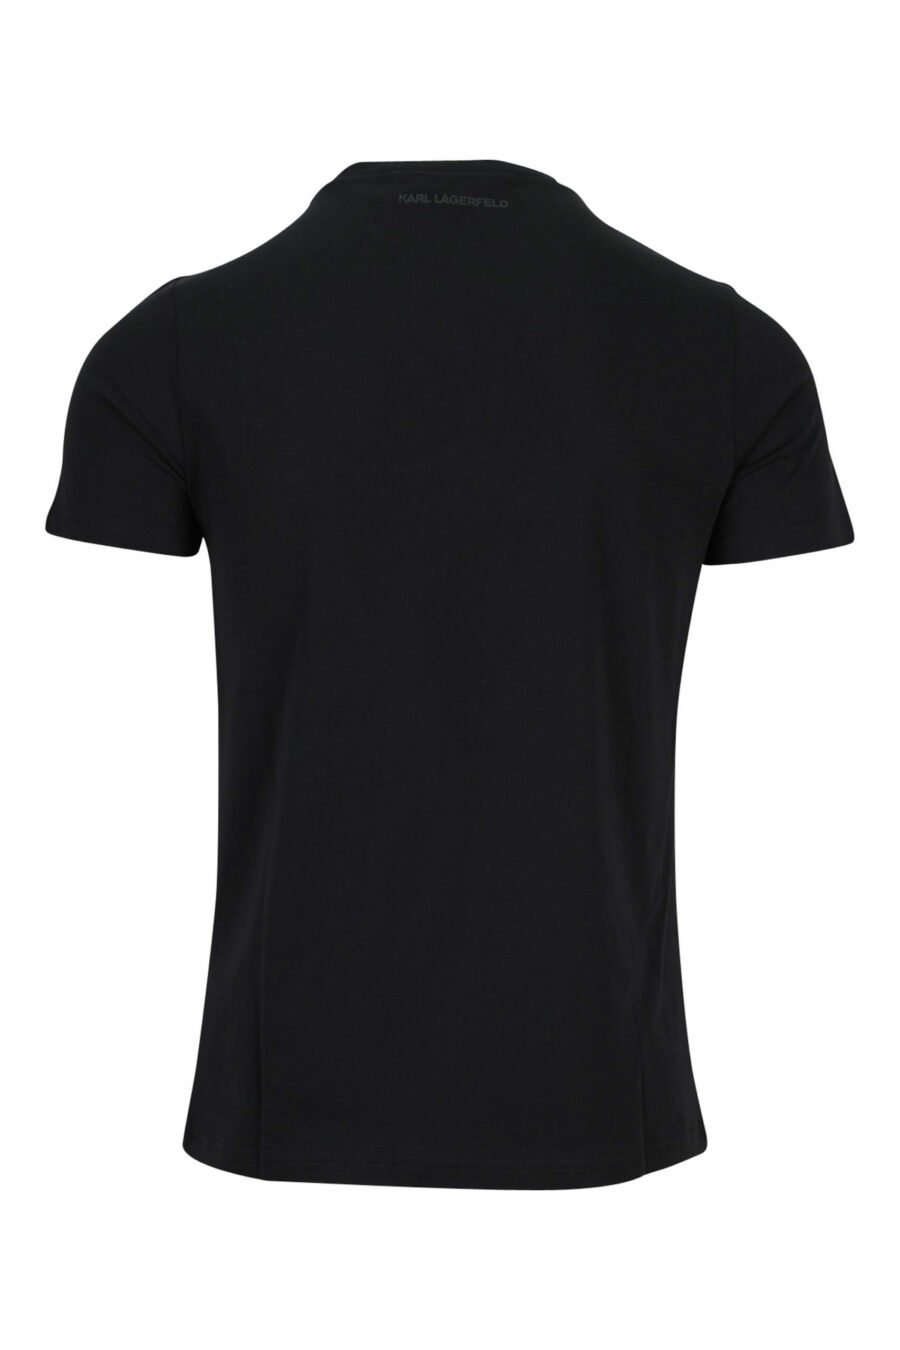 T-shirt preta de gola redonda com maxilogo "karl" - 4062225535398 1 scaled